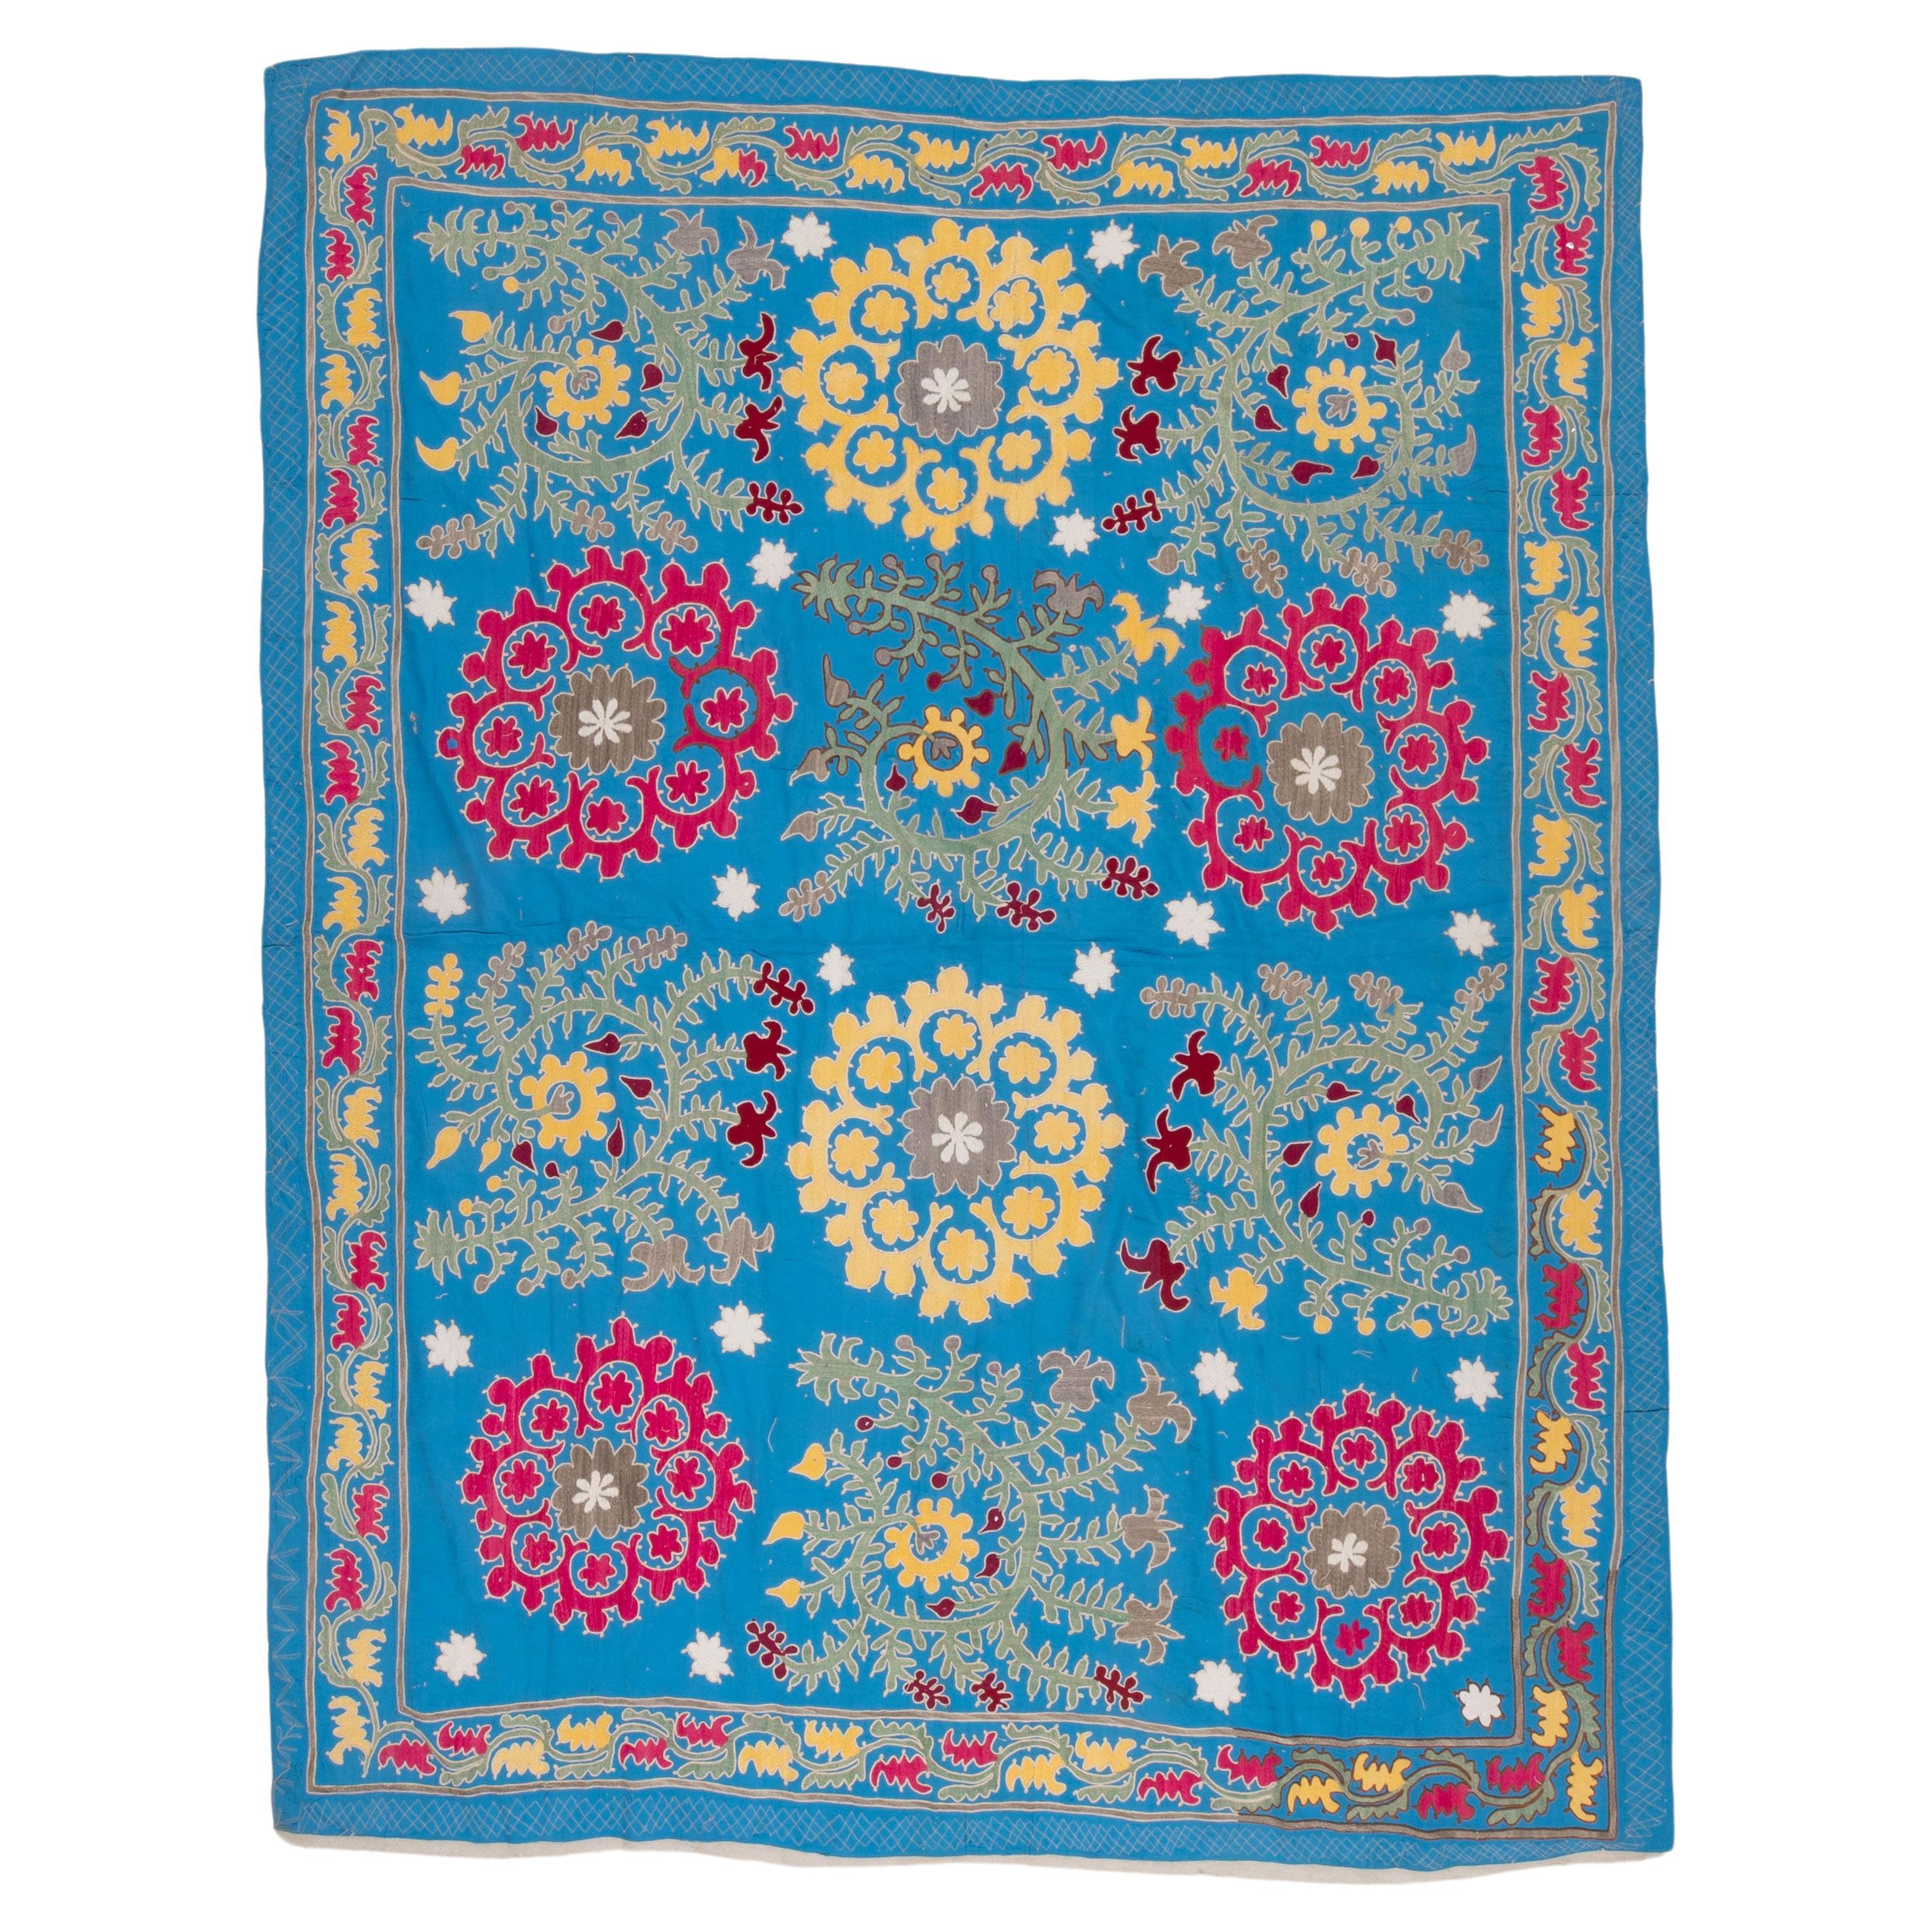 Uzbek Blue Suzani, cotton on Rayon background fabric, mid 20th C.